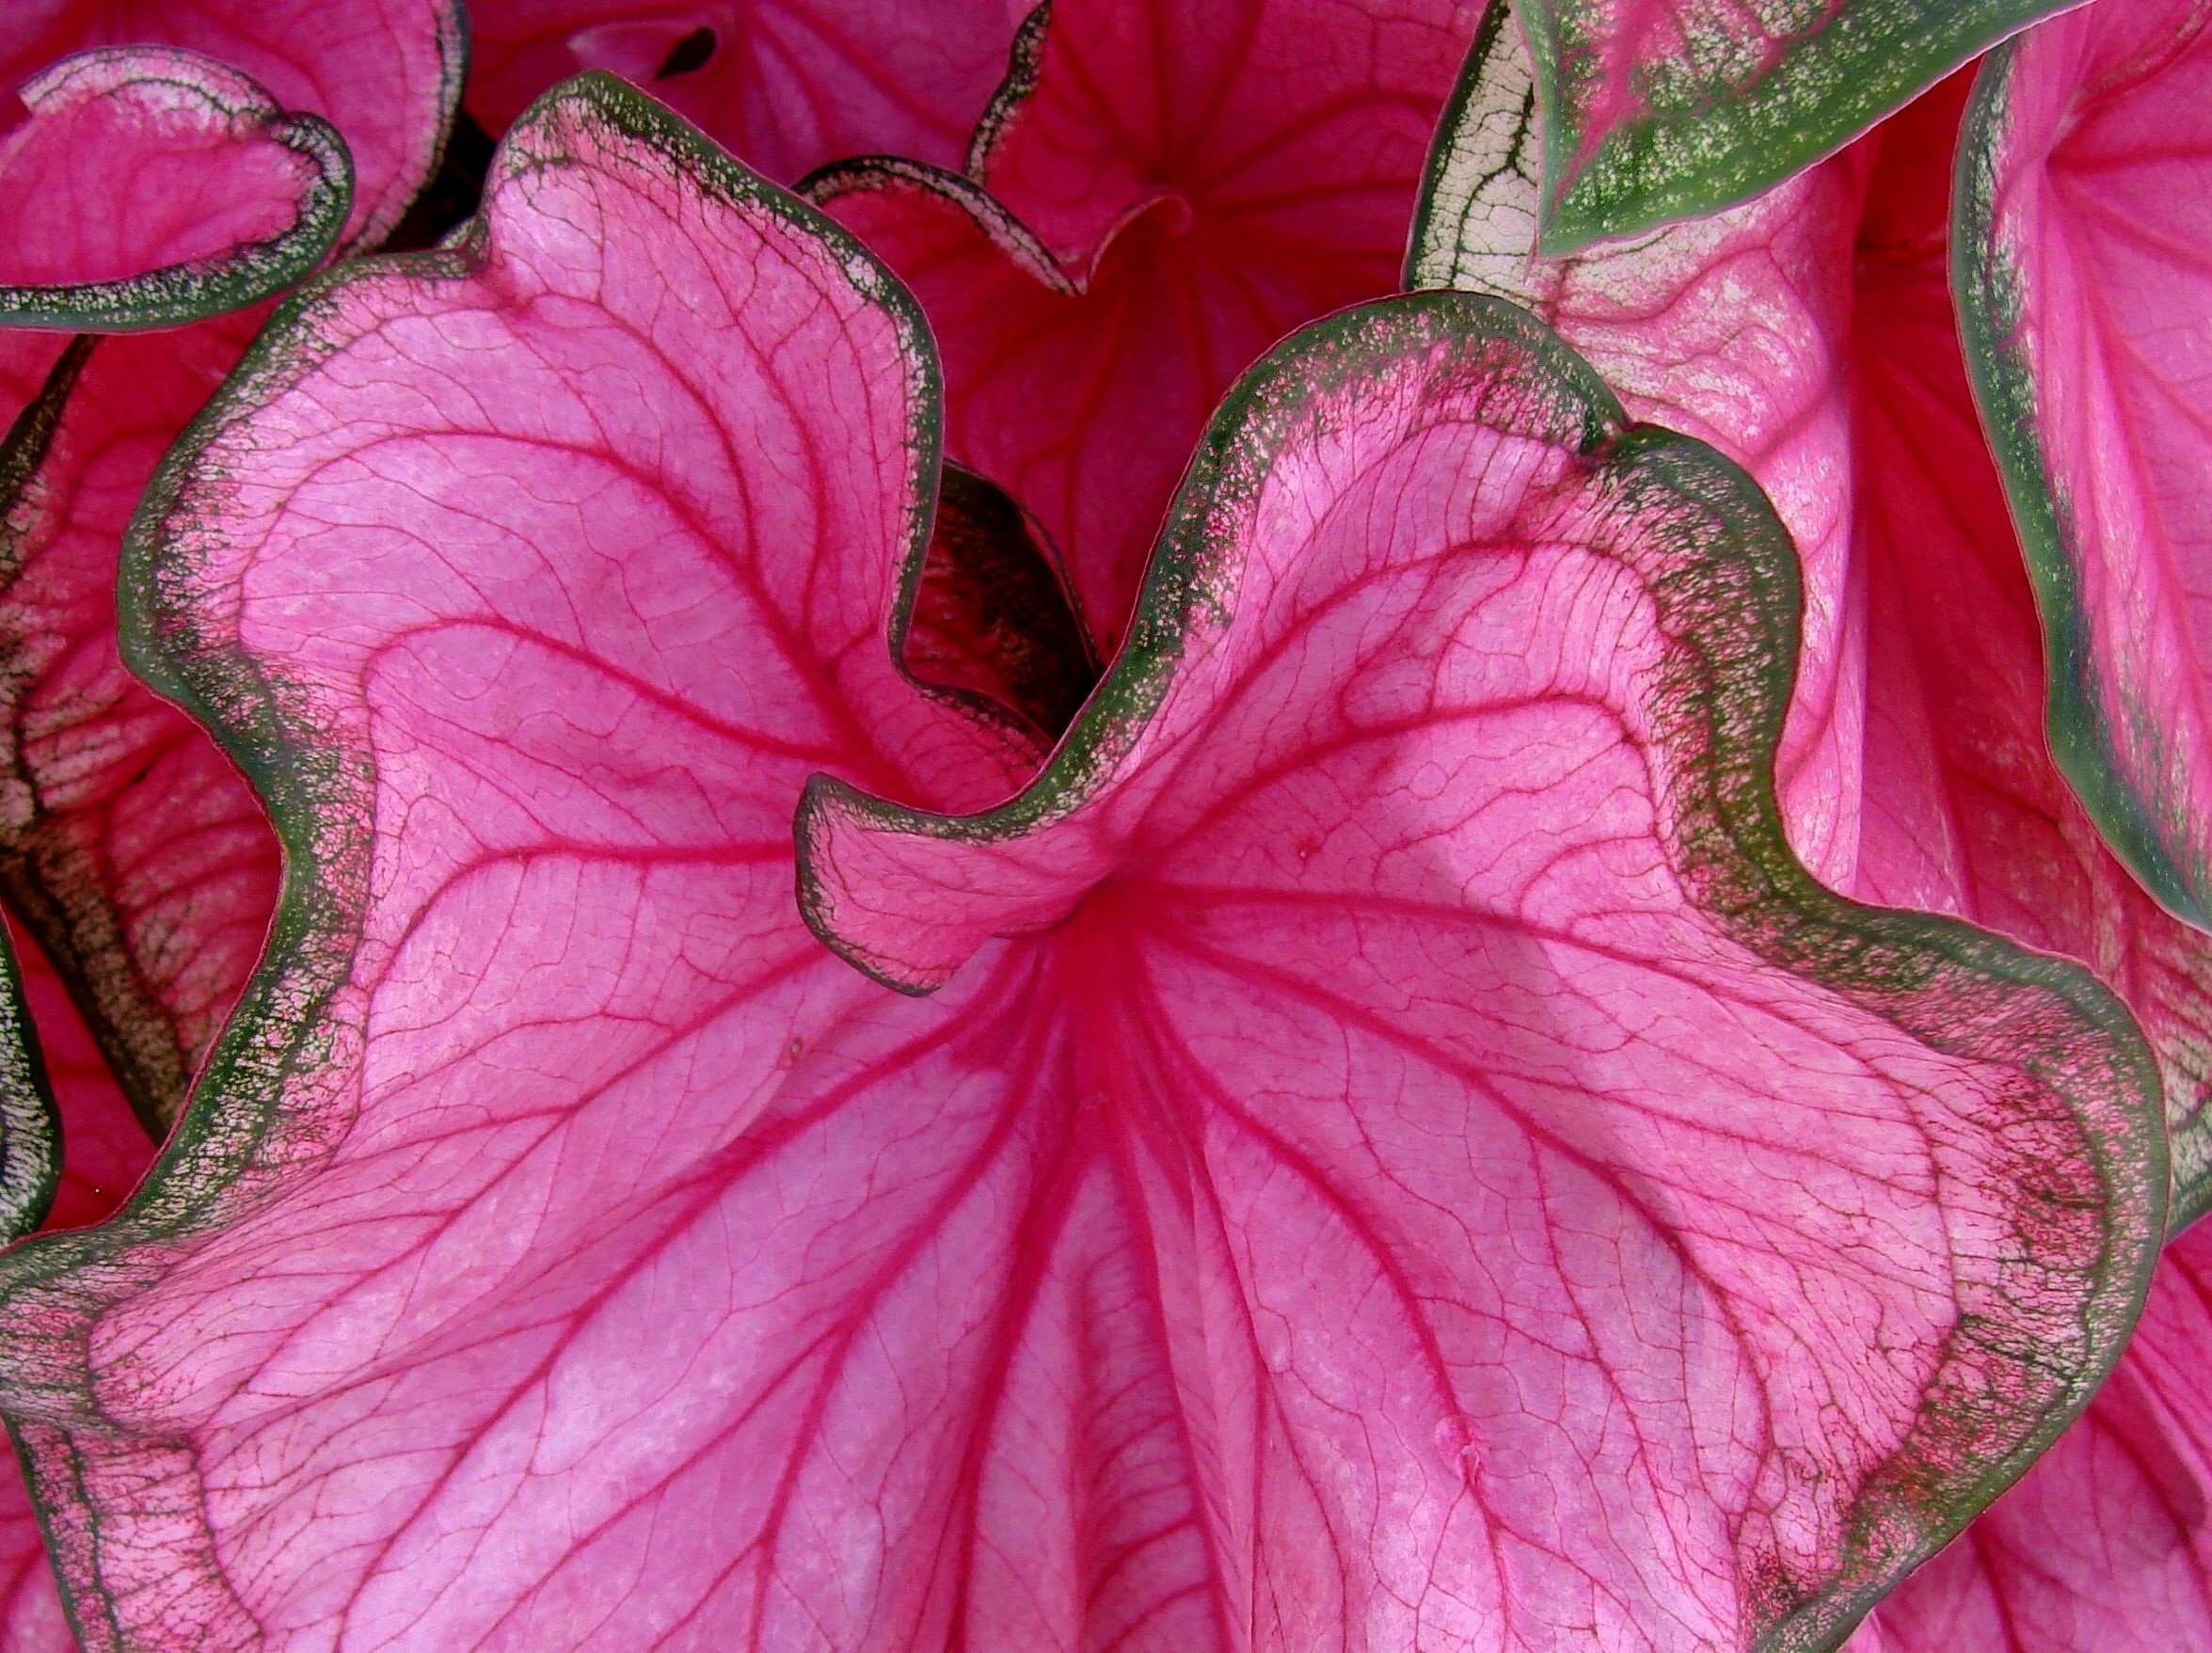 caladium, flower, nature, close-up, plant, pink color, growth